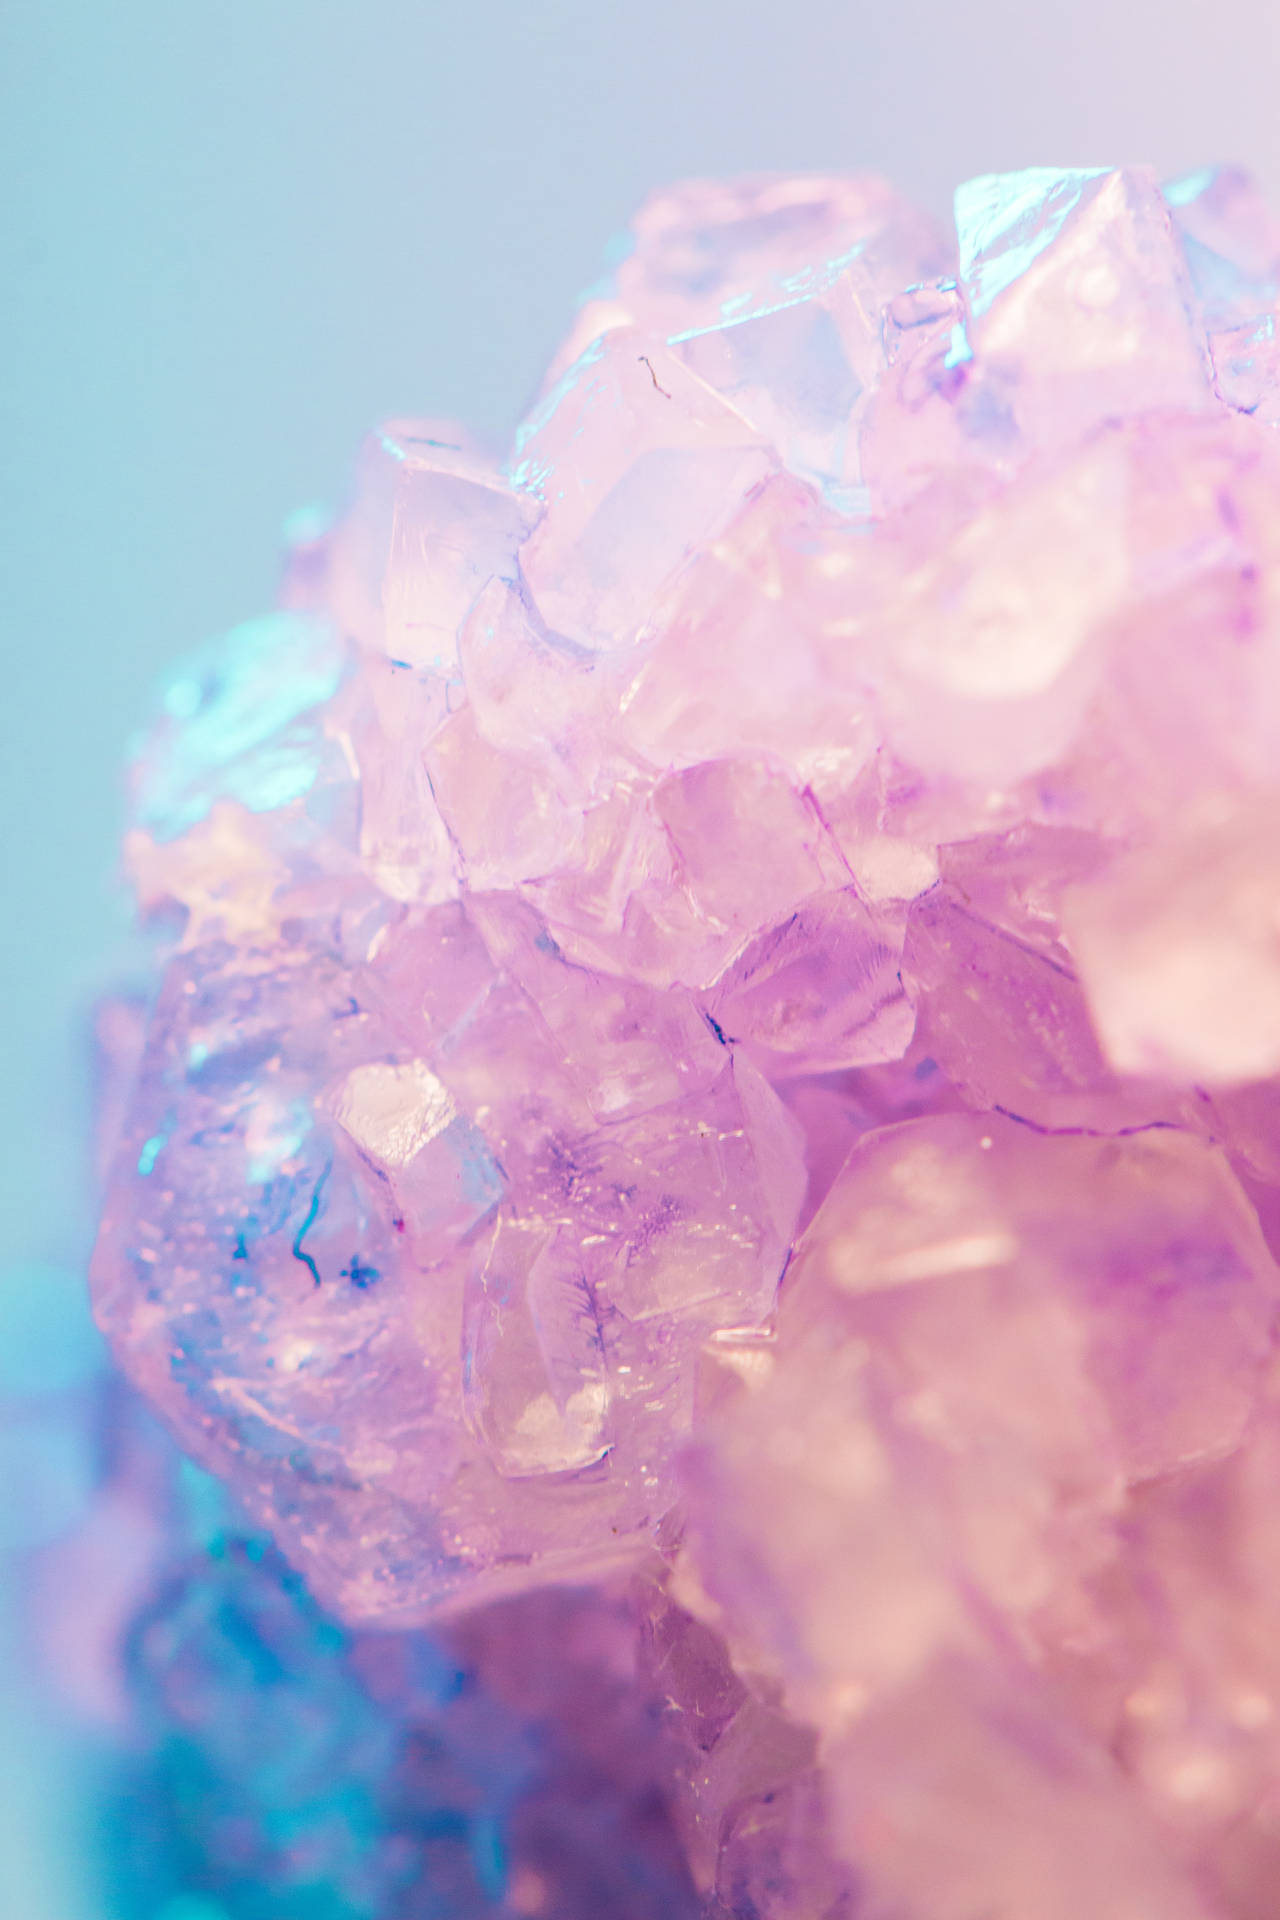 Redmi 4k Crystals